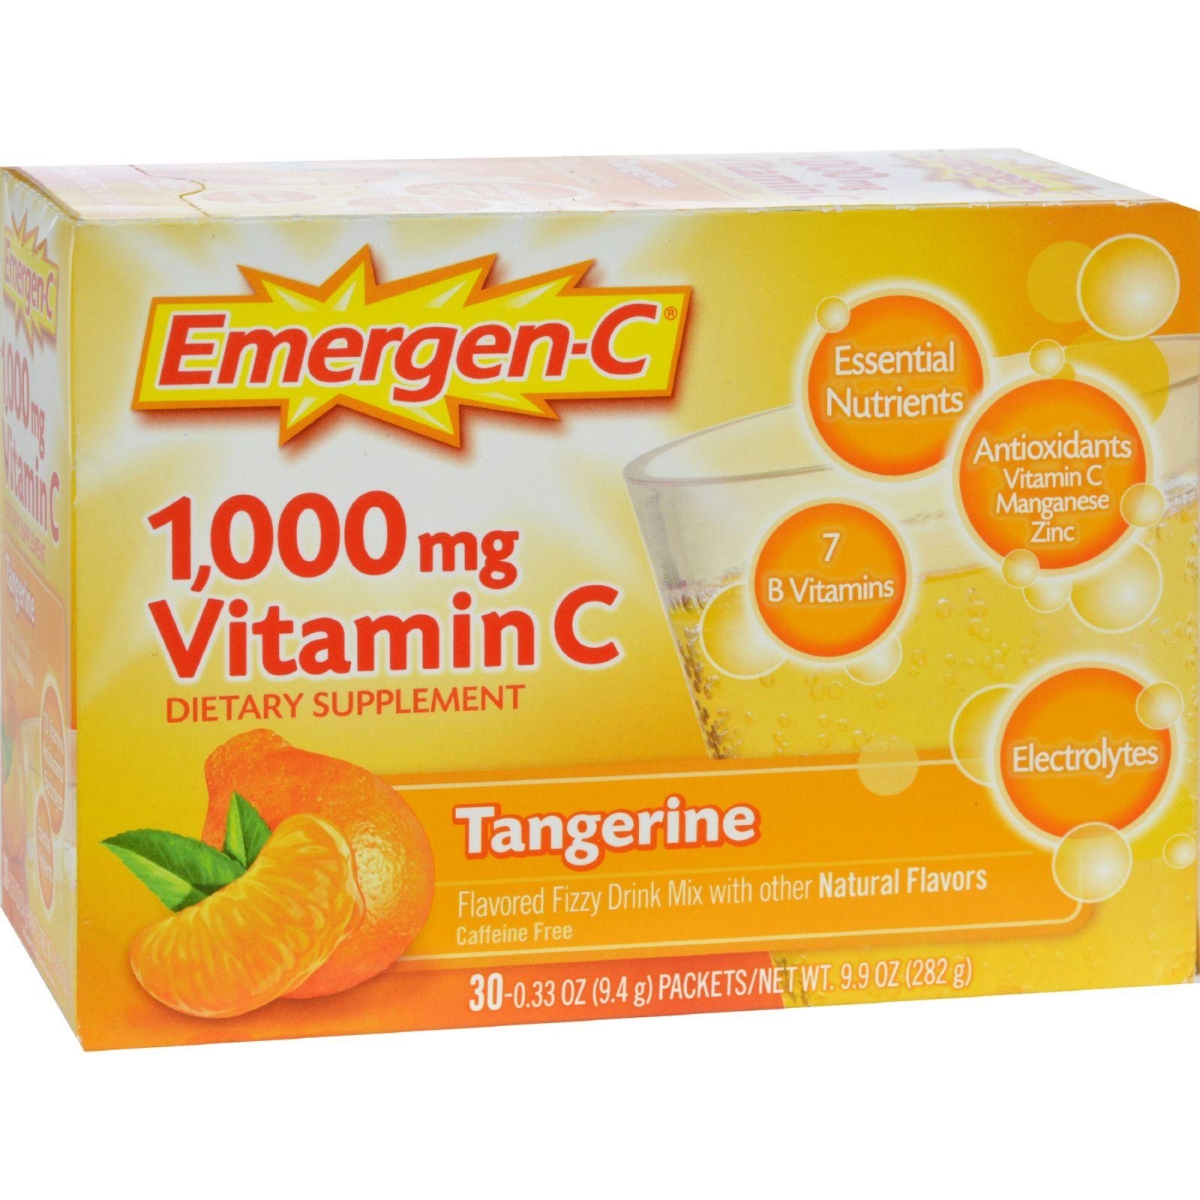 Alacer Hg0350991 1000 Mg Emergen-c Vitamin C Fizzy Drink Mix - Tangerine, 30 Packets